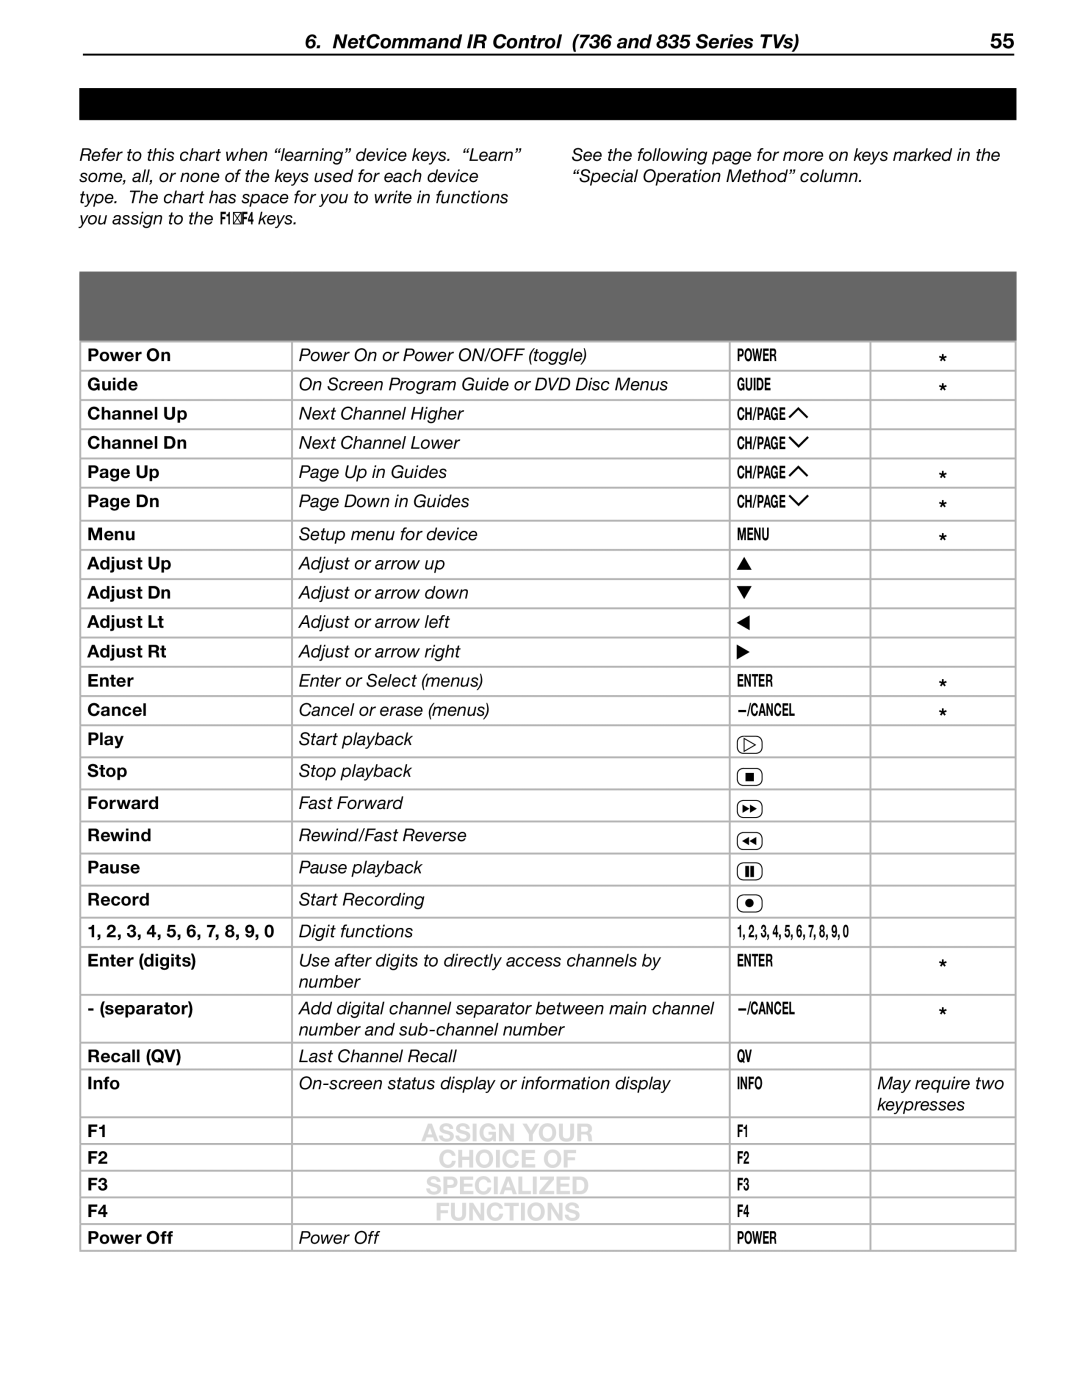 Mitsubishi Electronics WD-60C8 manual Power, Guide, Ch/Page 